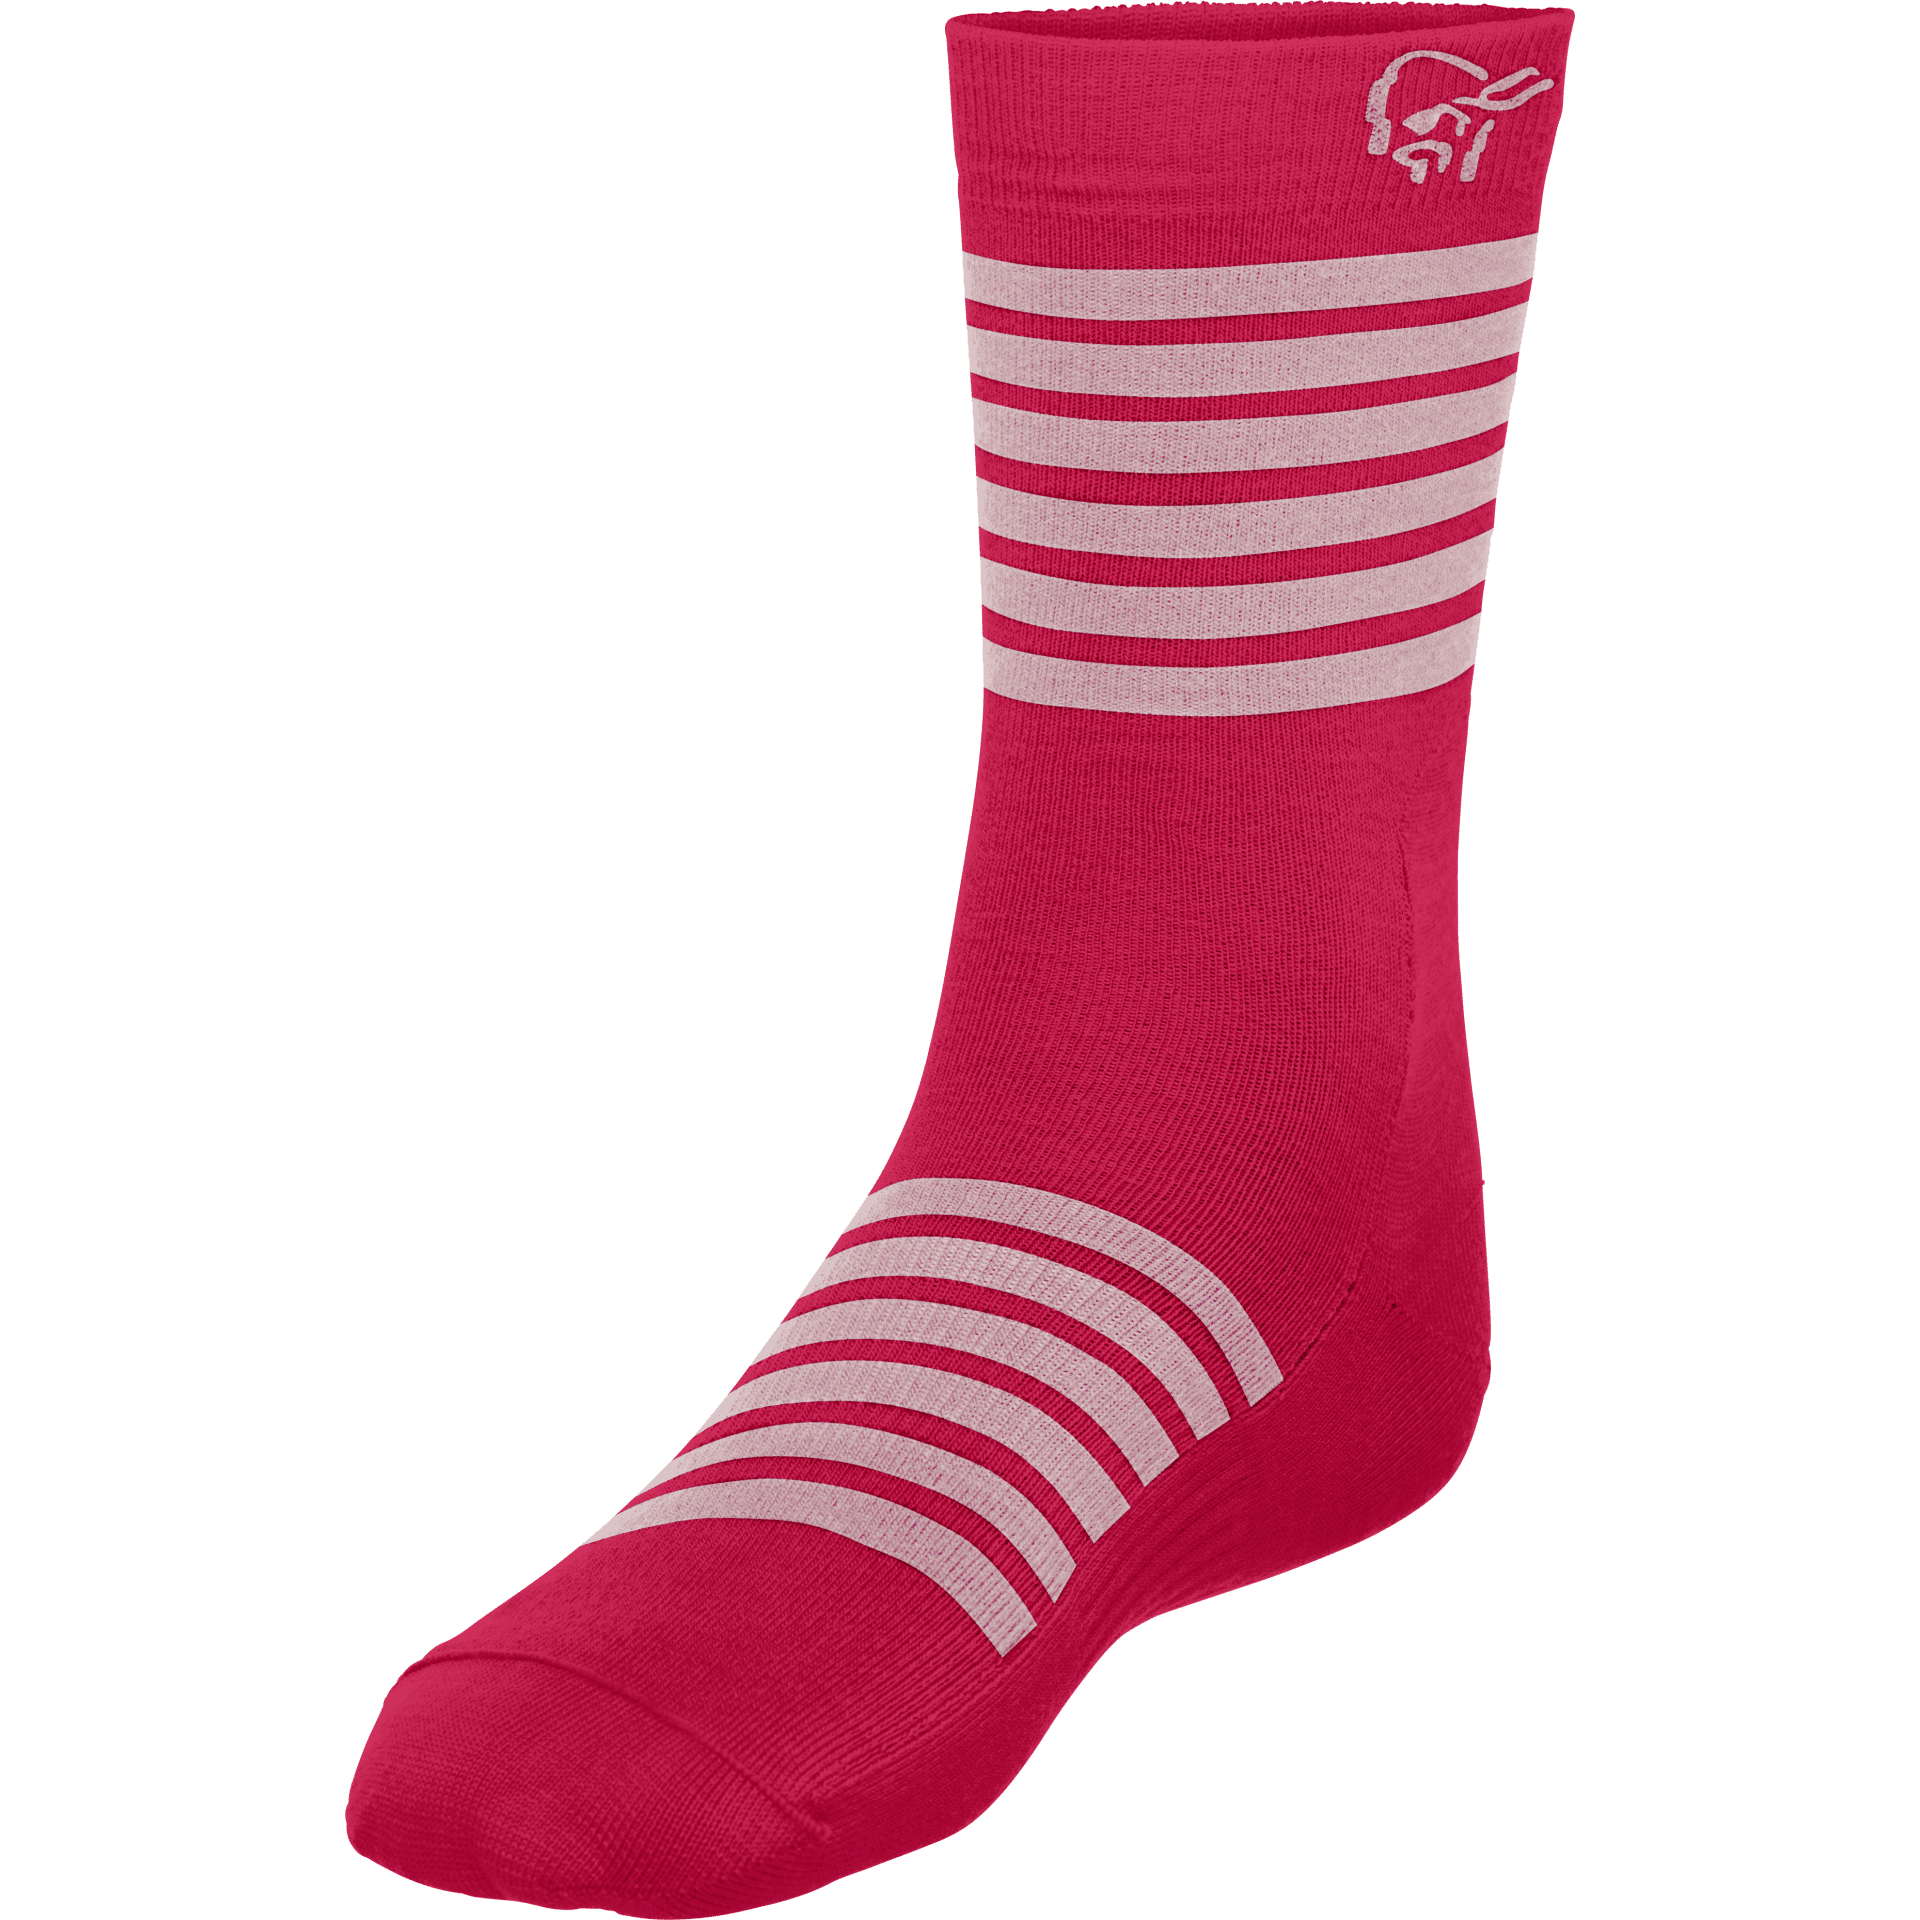 Norrøna Falketind Light Weight Merino Socks - Walking socks